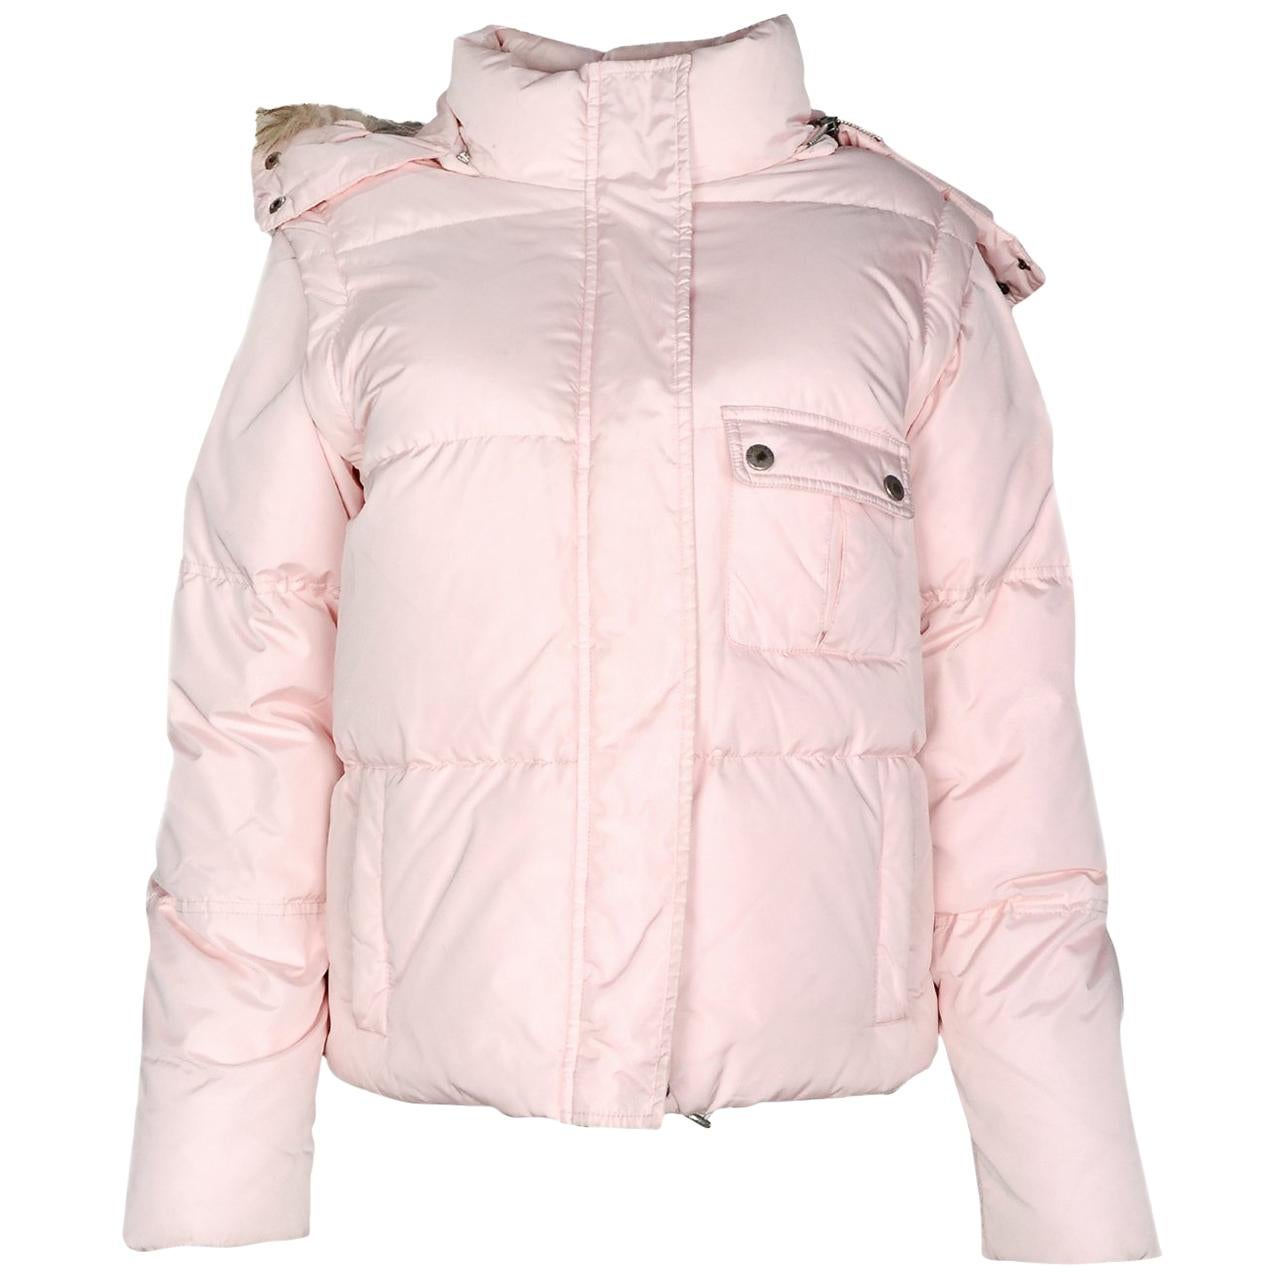 Burberry Light Pink Puffer Coat W/ Removable Fur Trim Hood & Sleeves (Vest) Sz M